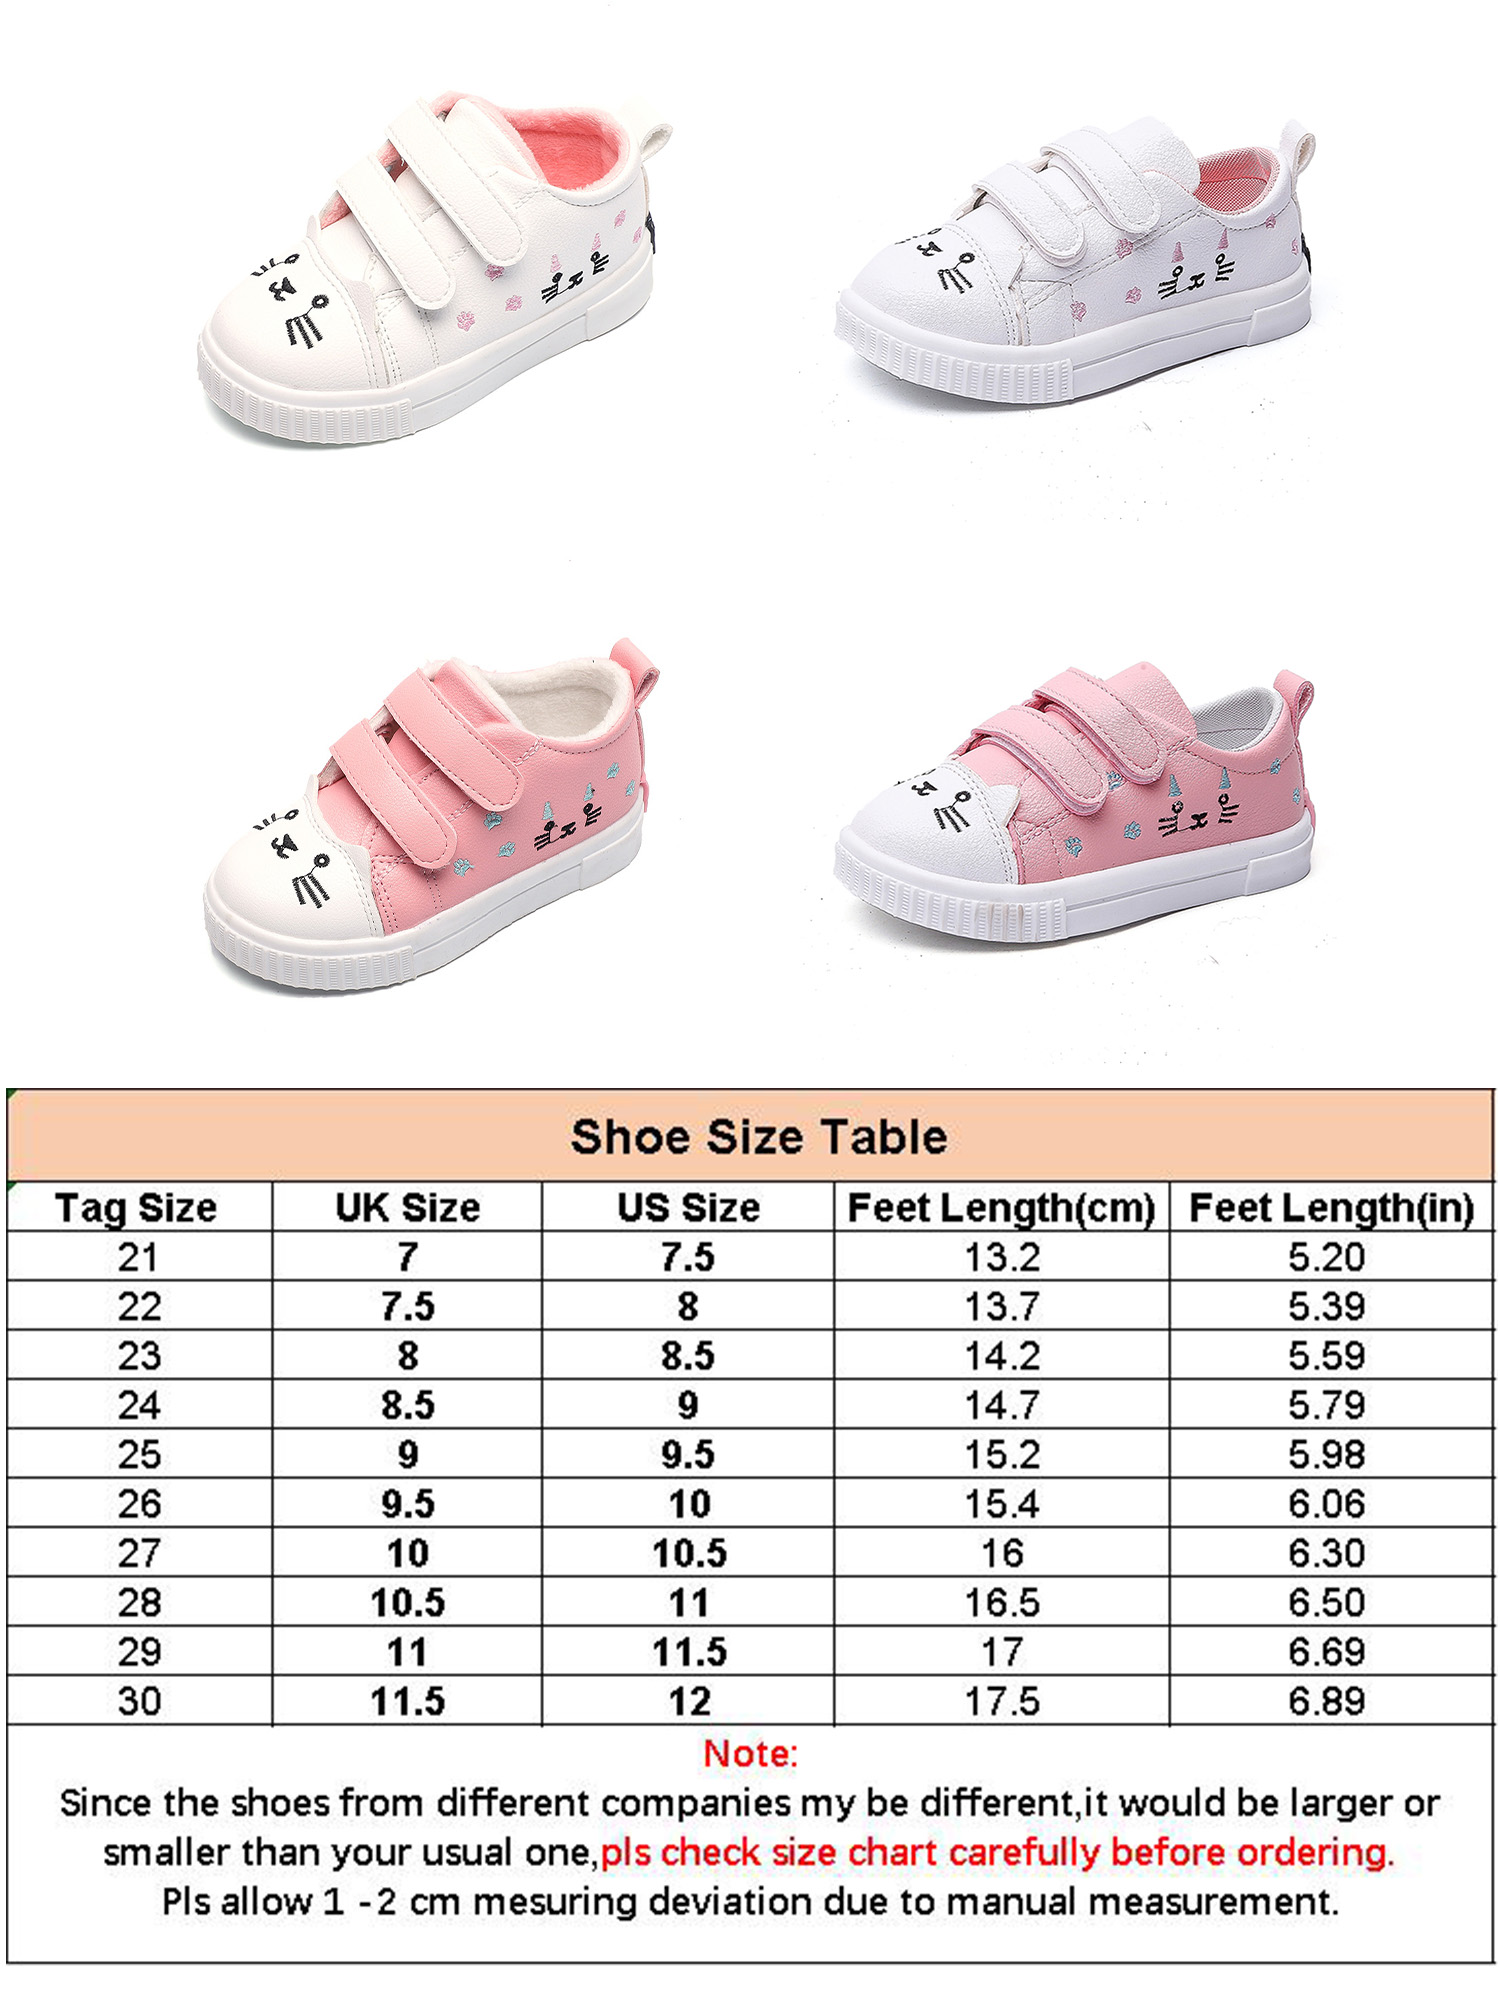 UKAP Boys Girls Anti-Slip Classic Low Top Slip On Sneakers Tennis Shoes Kids Flat Shoes - image 2 of 5